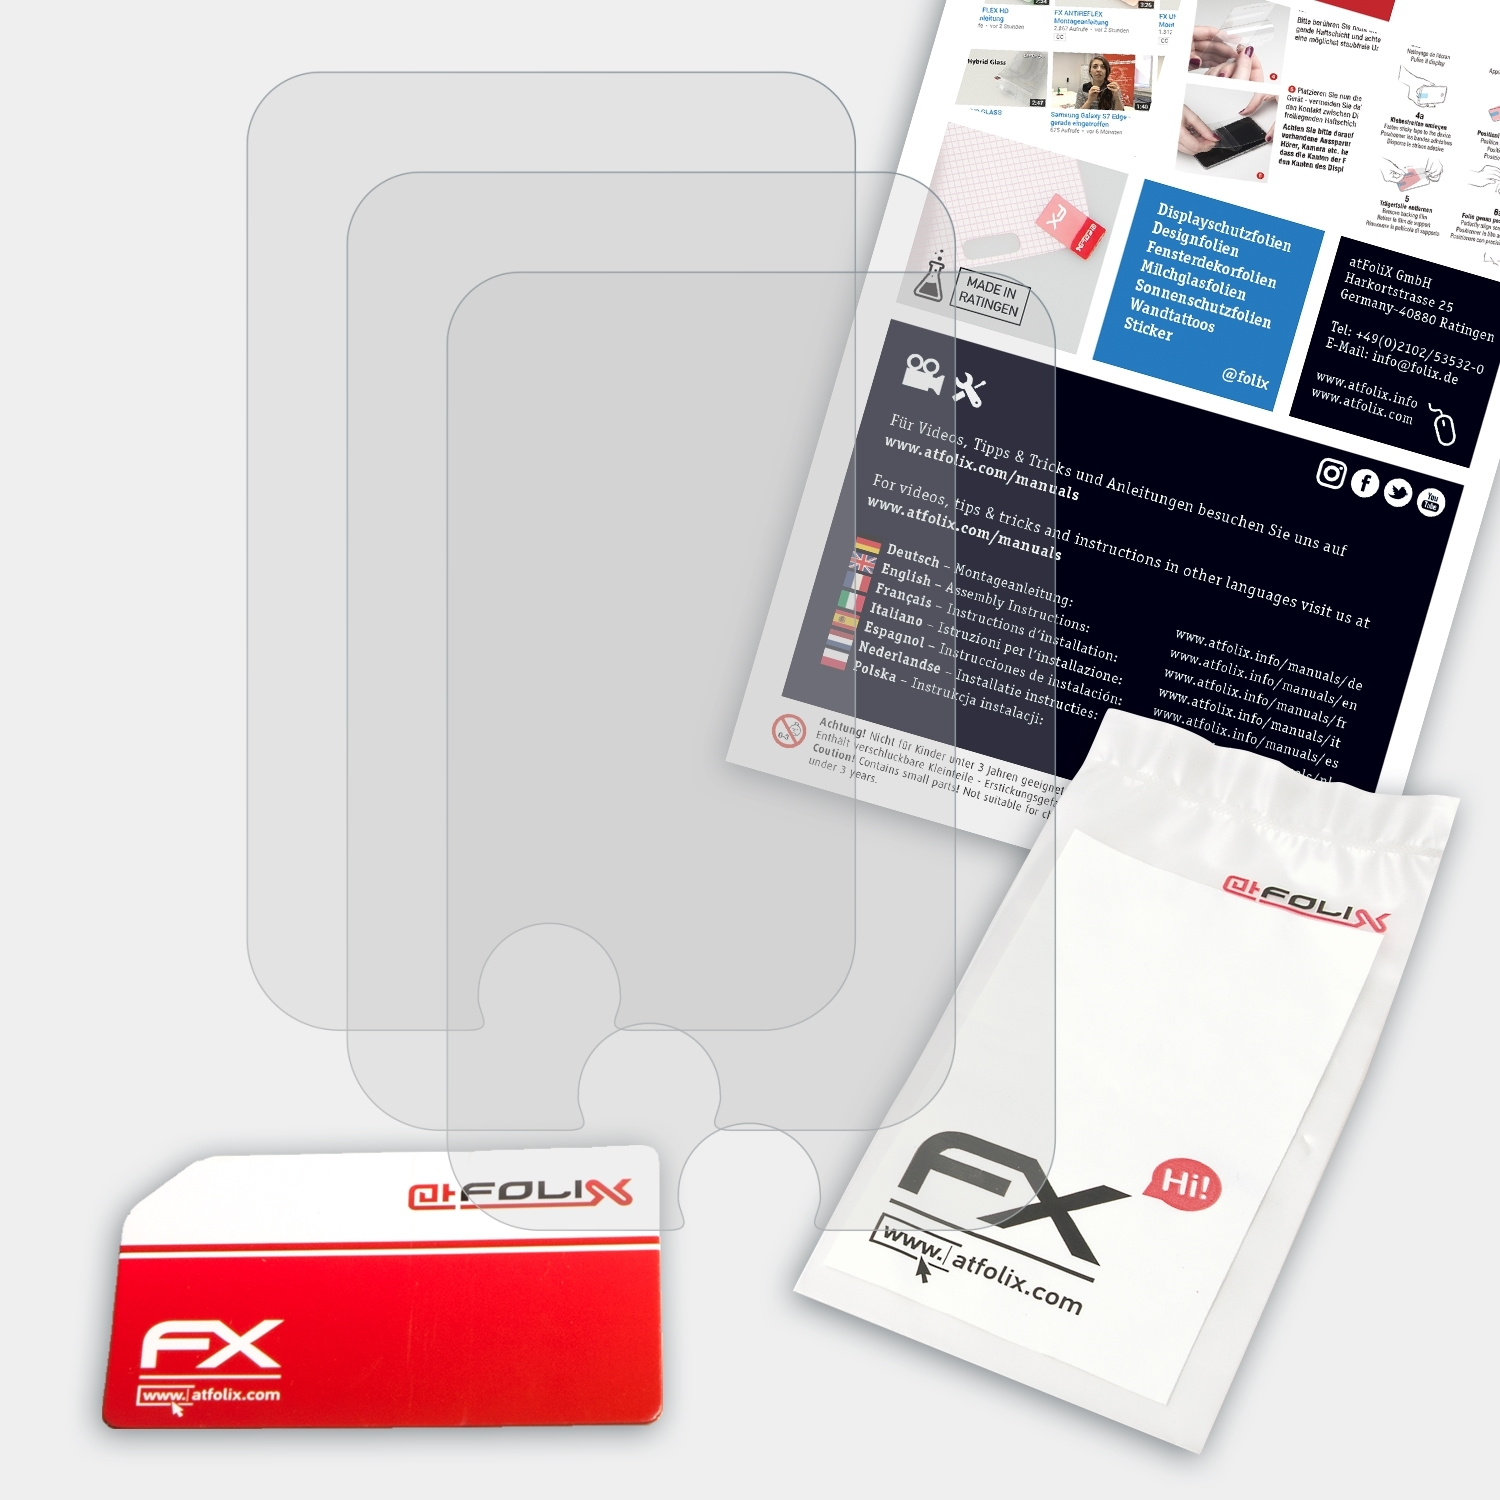 FX-Antireflex Displayschutz(für BikePilot) Blaupunkt ATFOLIX 3x